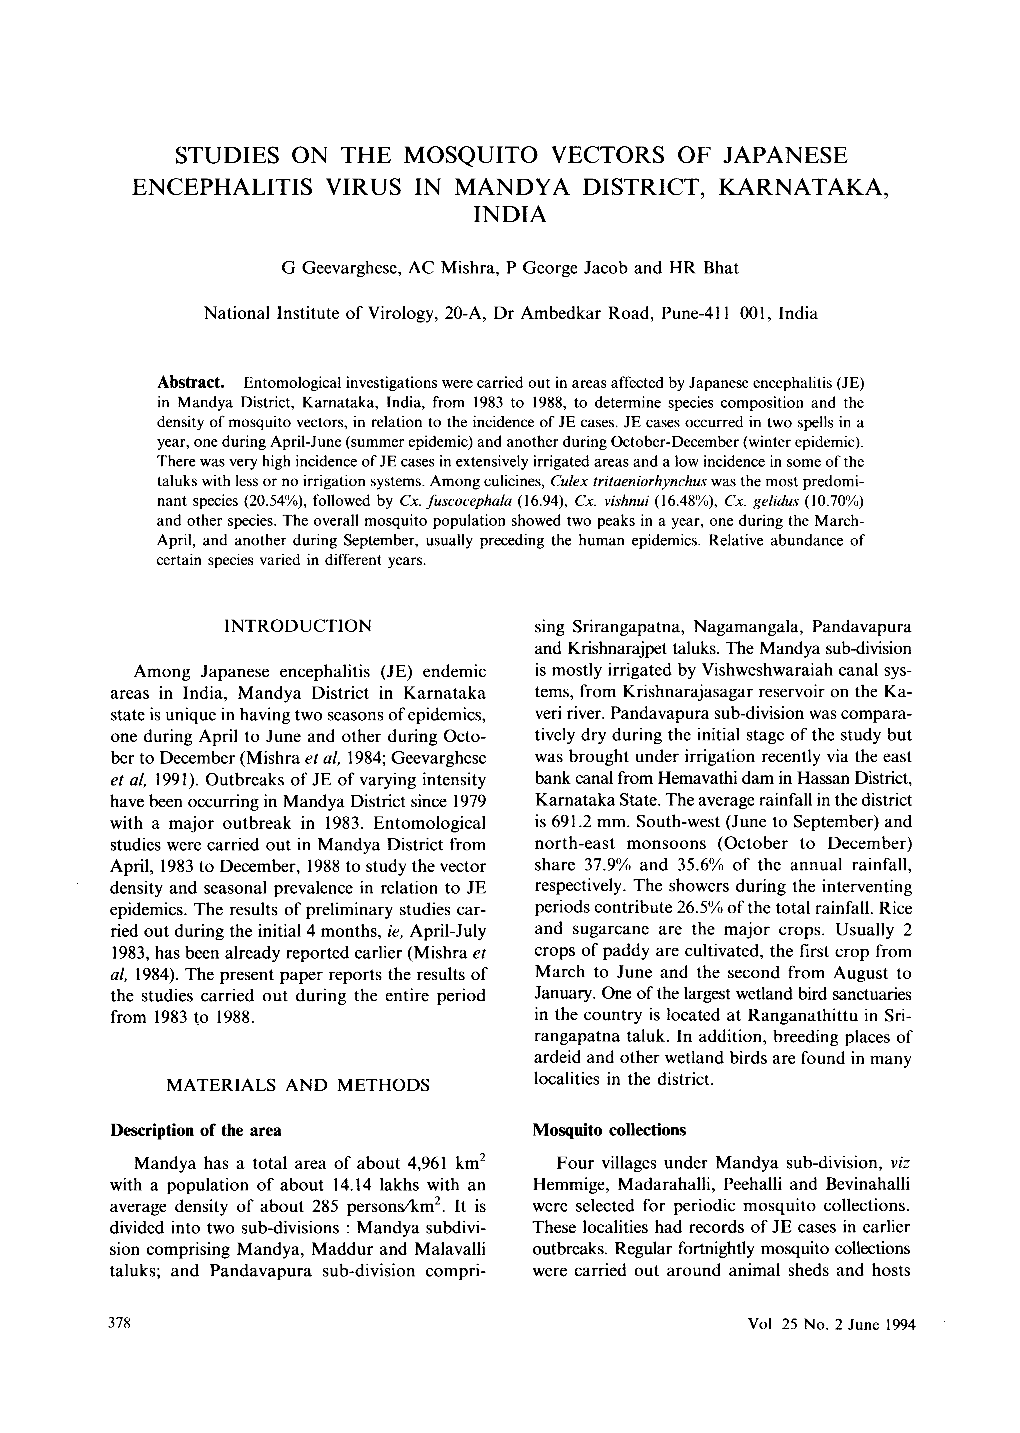 Studies on the Mosquito Vectors of Japanese Encephalitis Virus in Mandya District, Karnataka, India